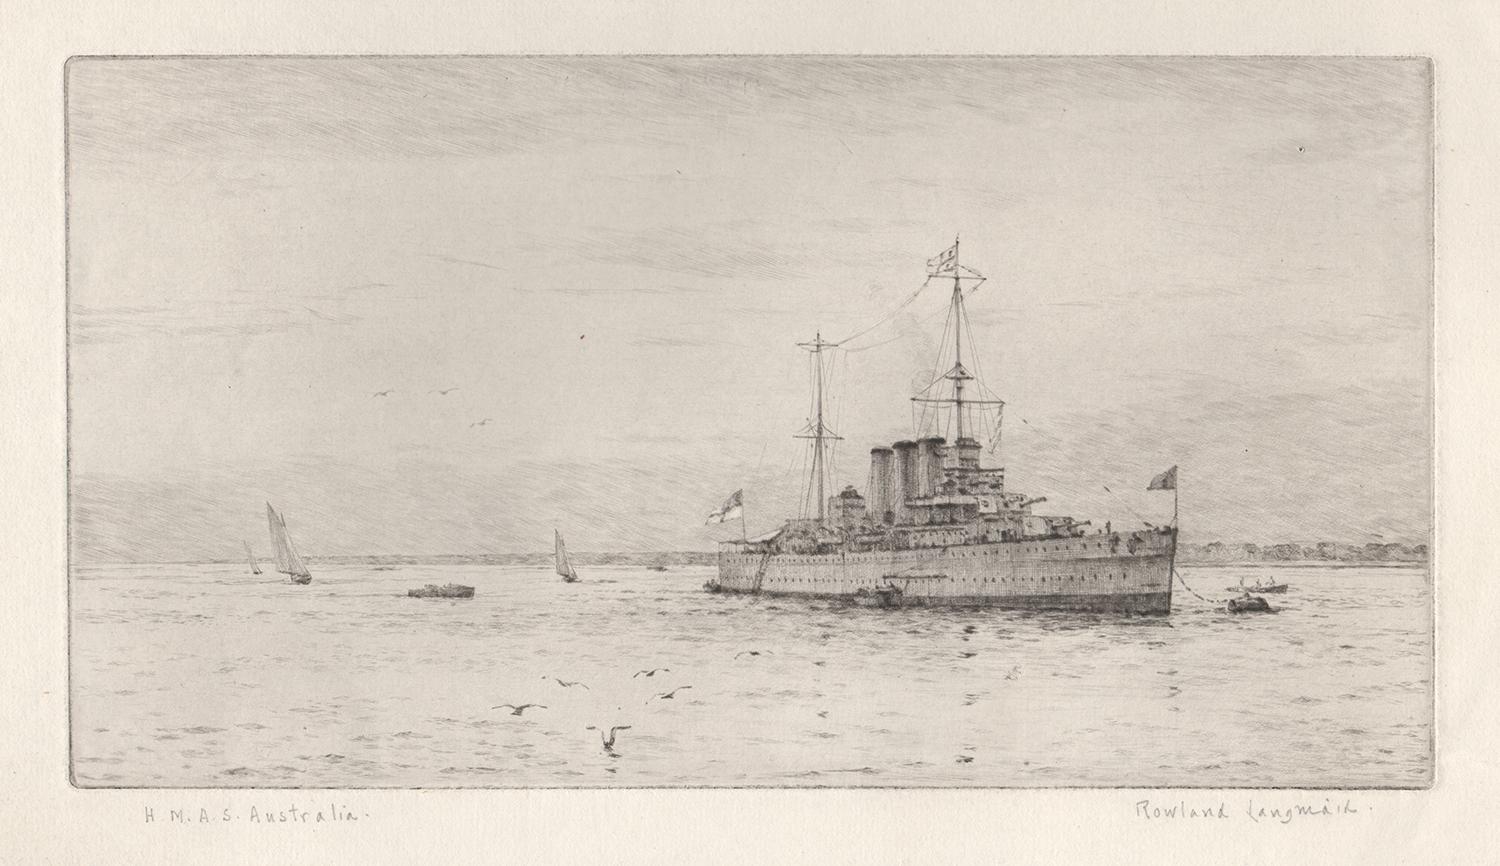 HMAS Australia. Rowland Langmaid - Impression vintage signée de navire naval, imprimée